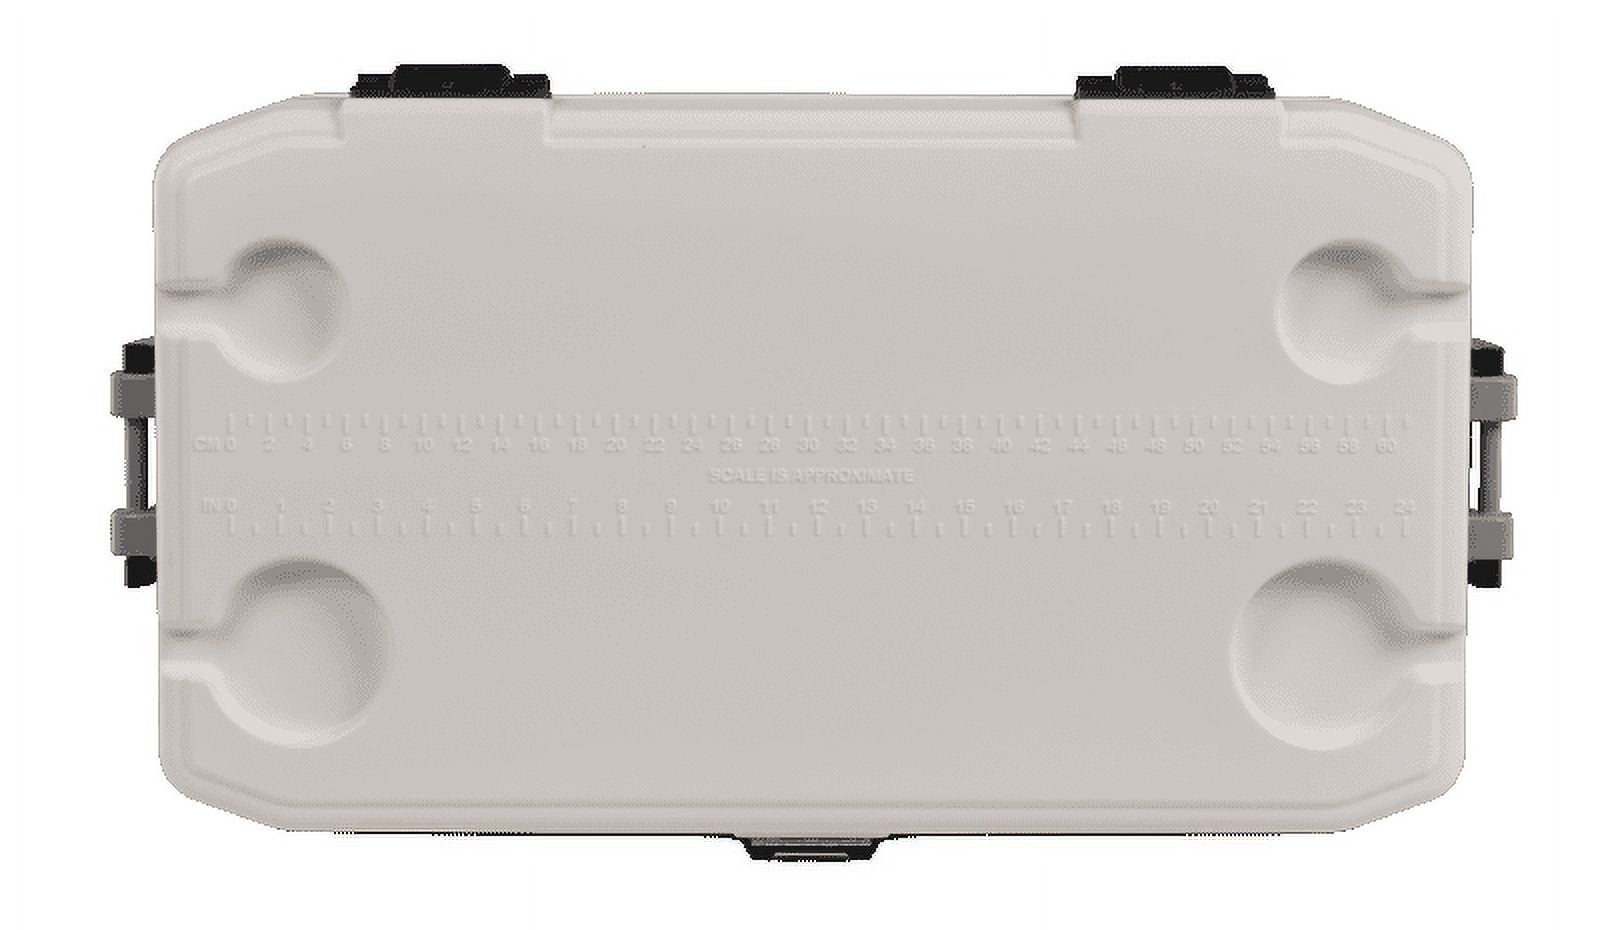 Igloo Latitude Marine Ultra 30 Qt. Cooler, White - Brownsboro Hardware &  Paint